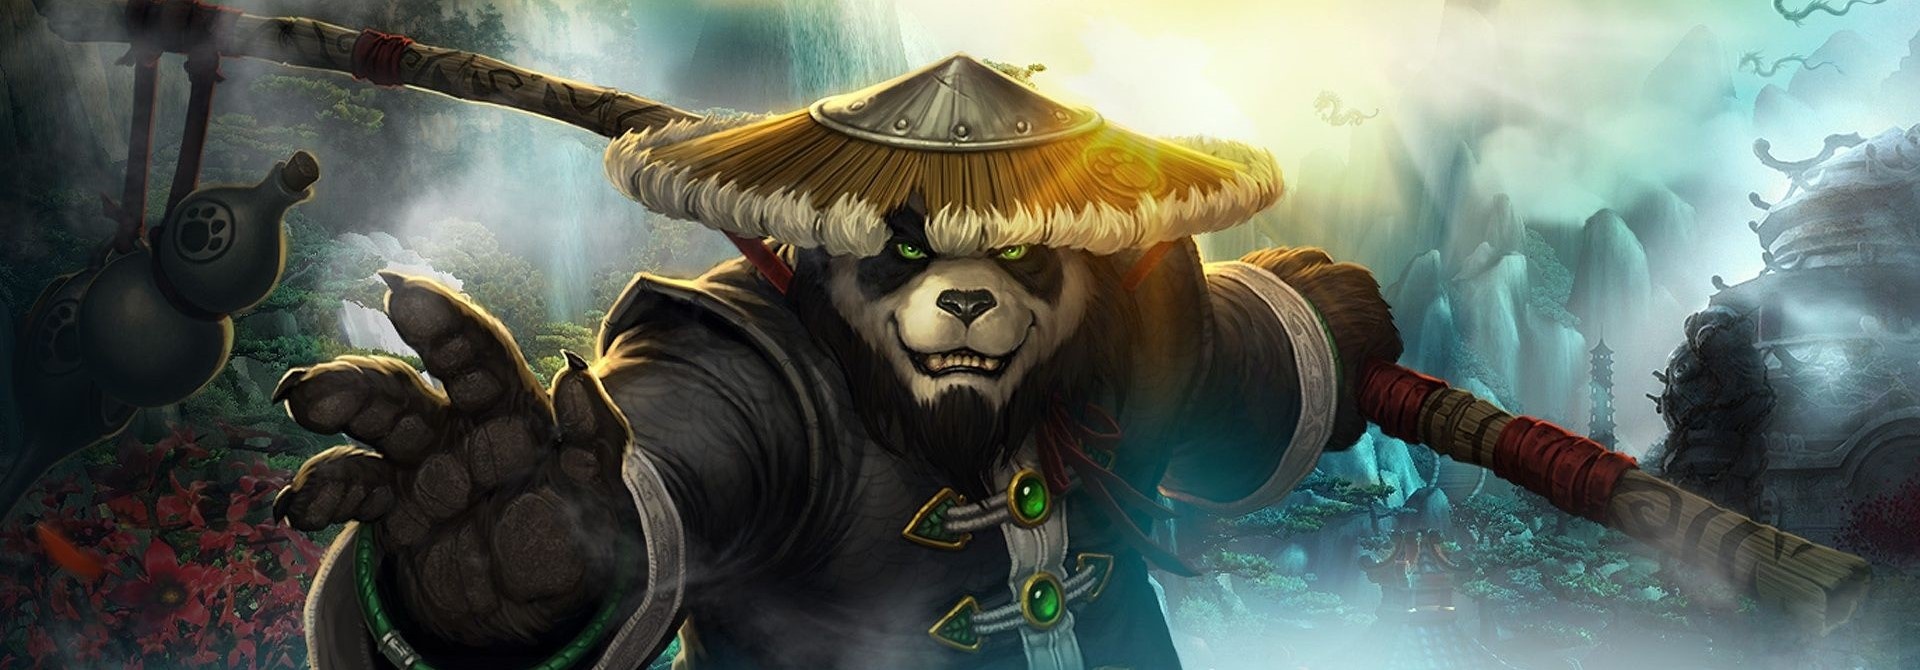 Premiera World of Warcraft: Mists of Pandaria 9 lat temu, 25 września 2012 r.